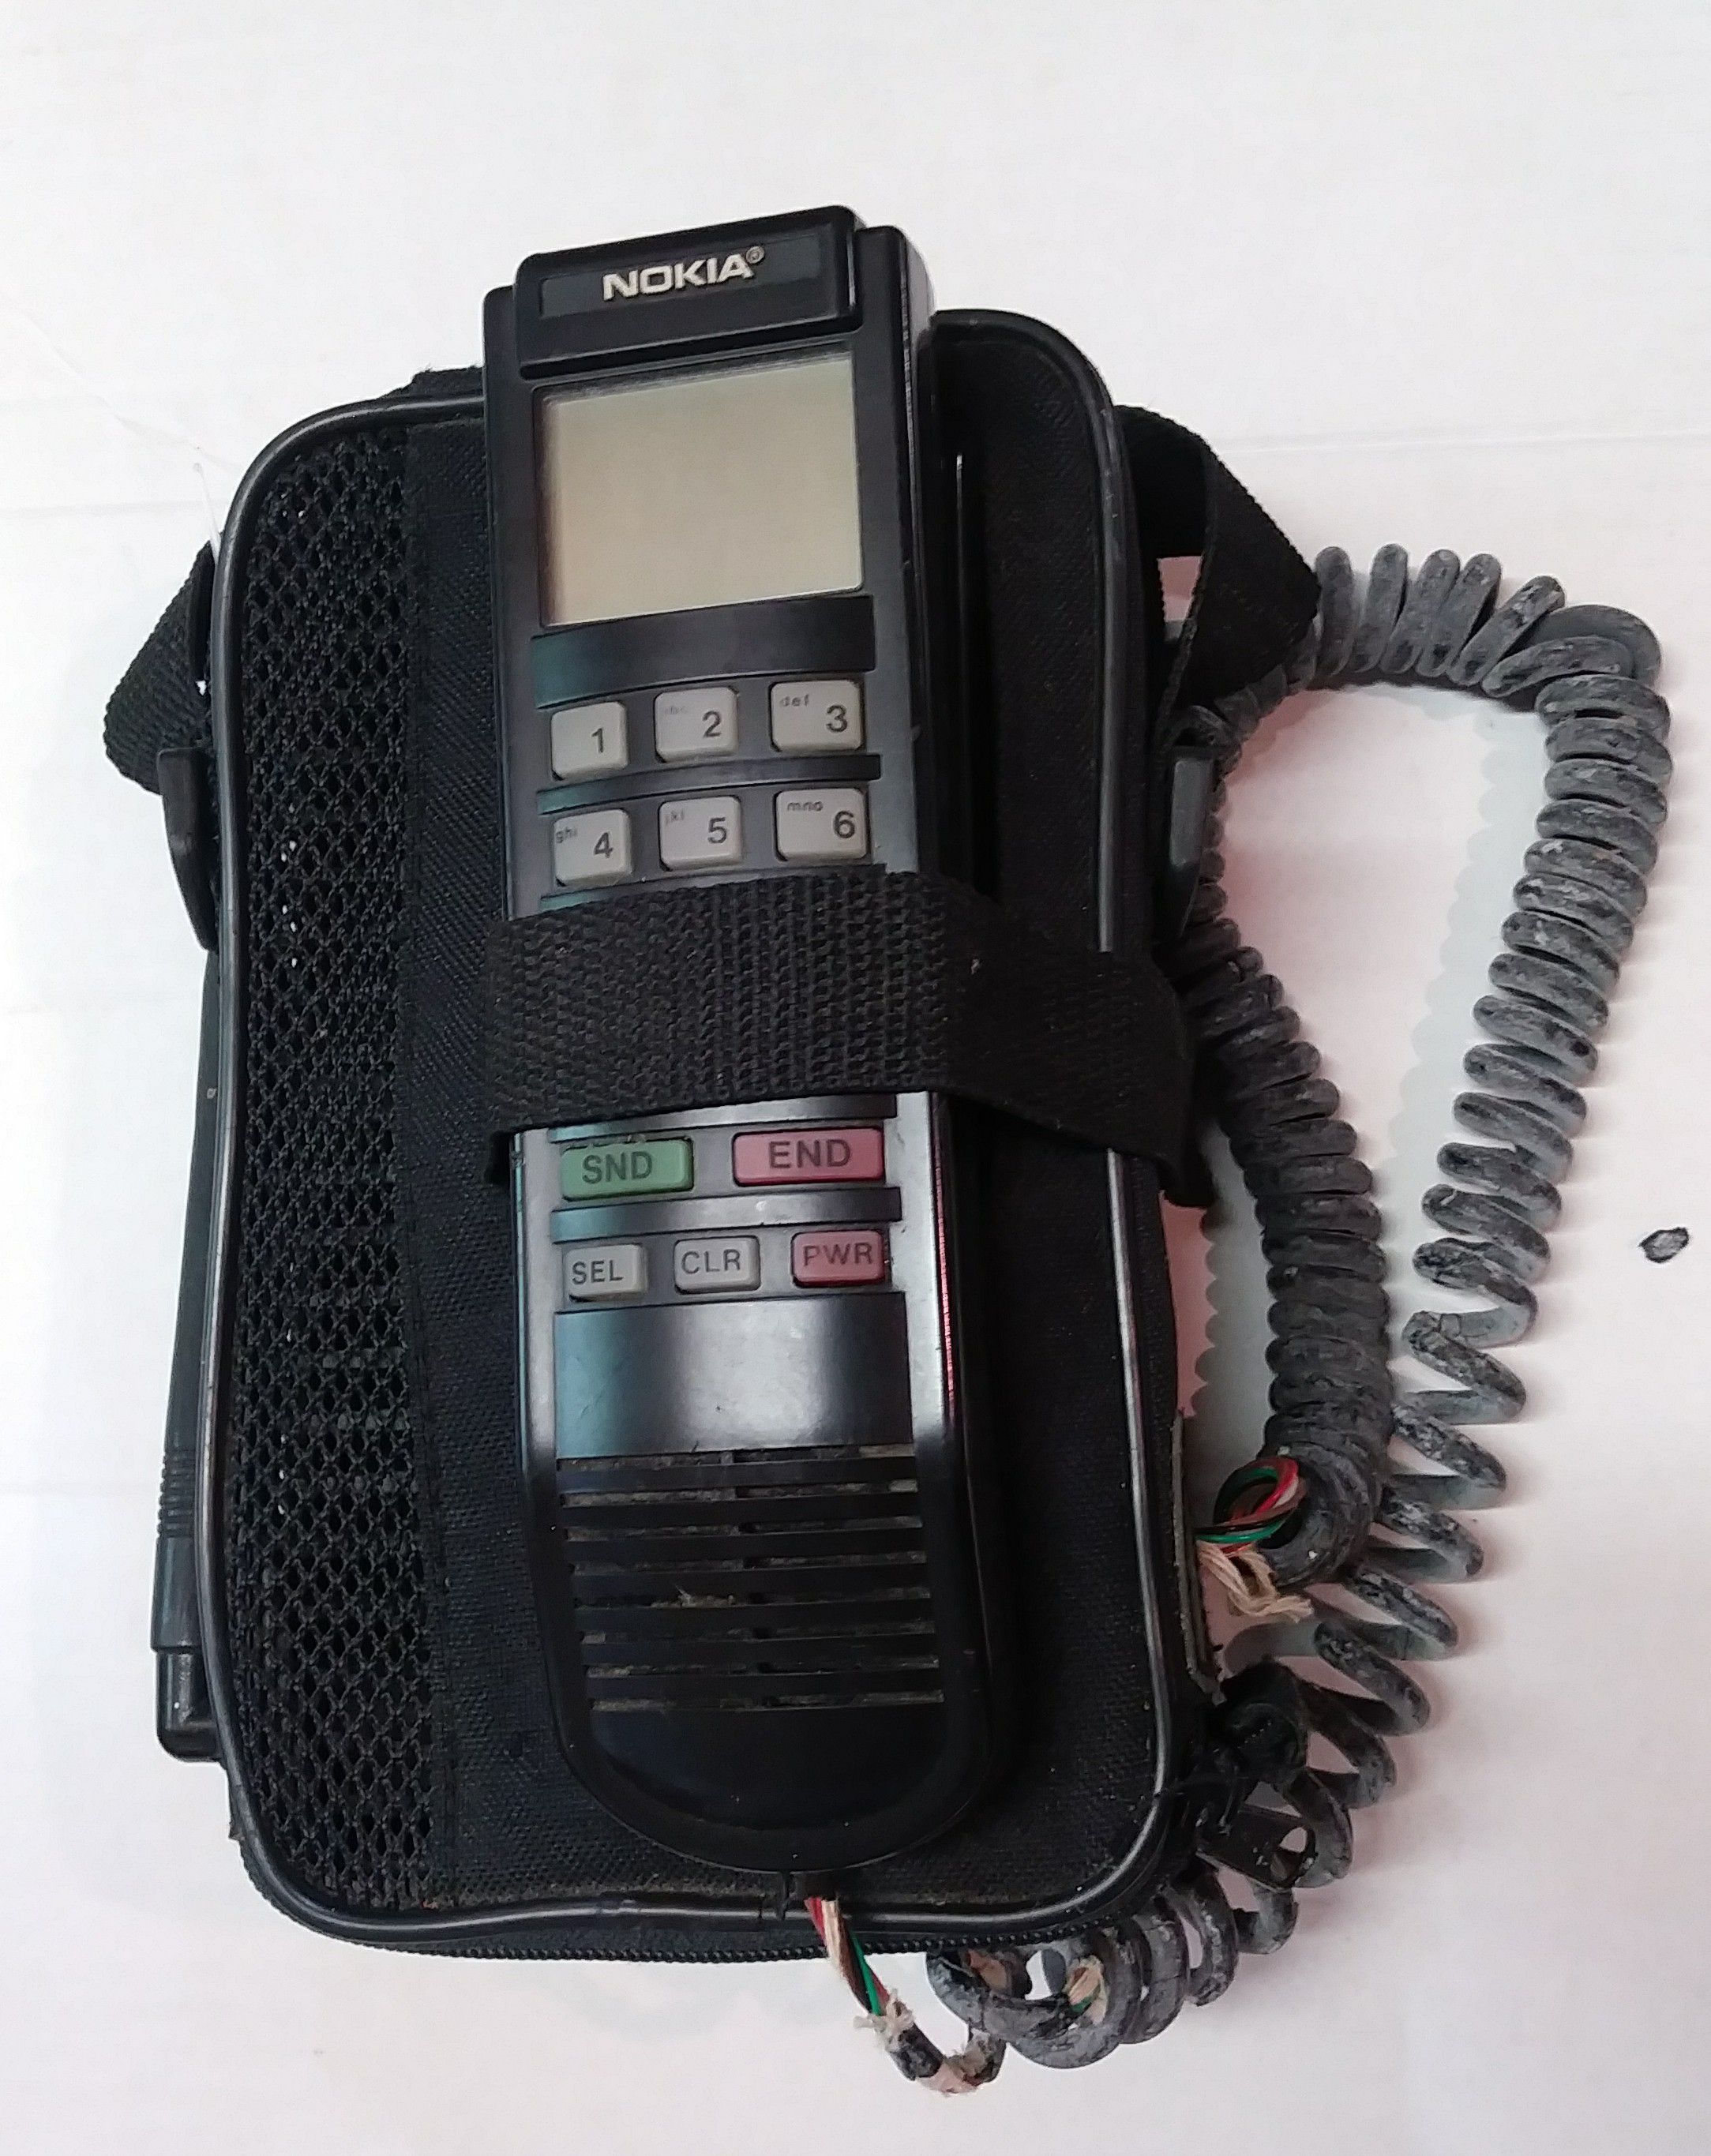 NOKIA Car Bag Phone for Sale in Virginia Beach, VA - OfferUp